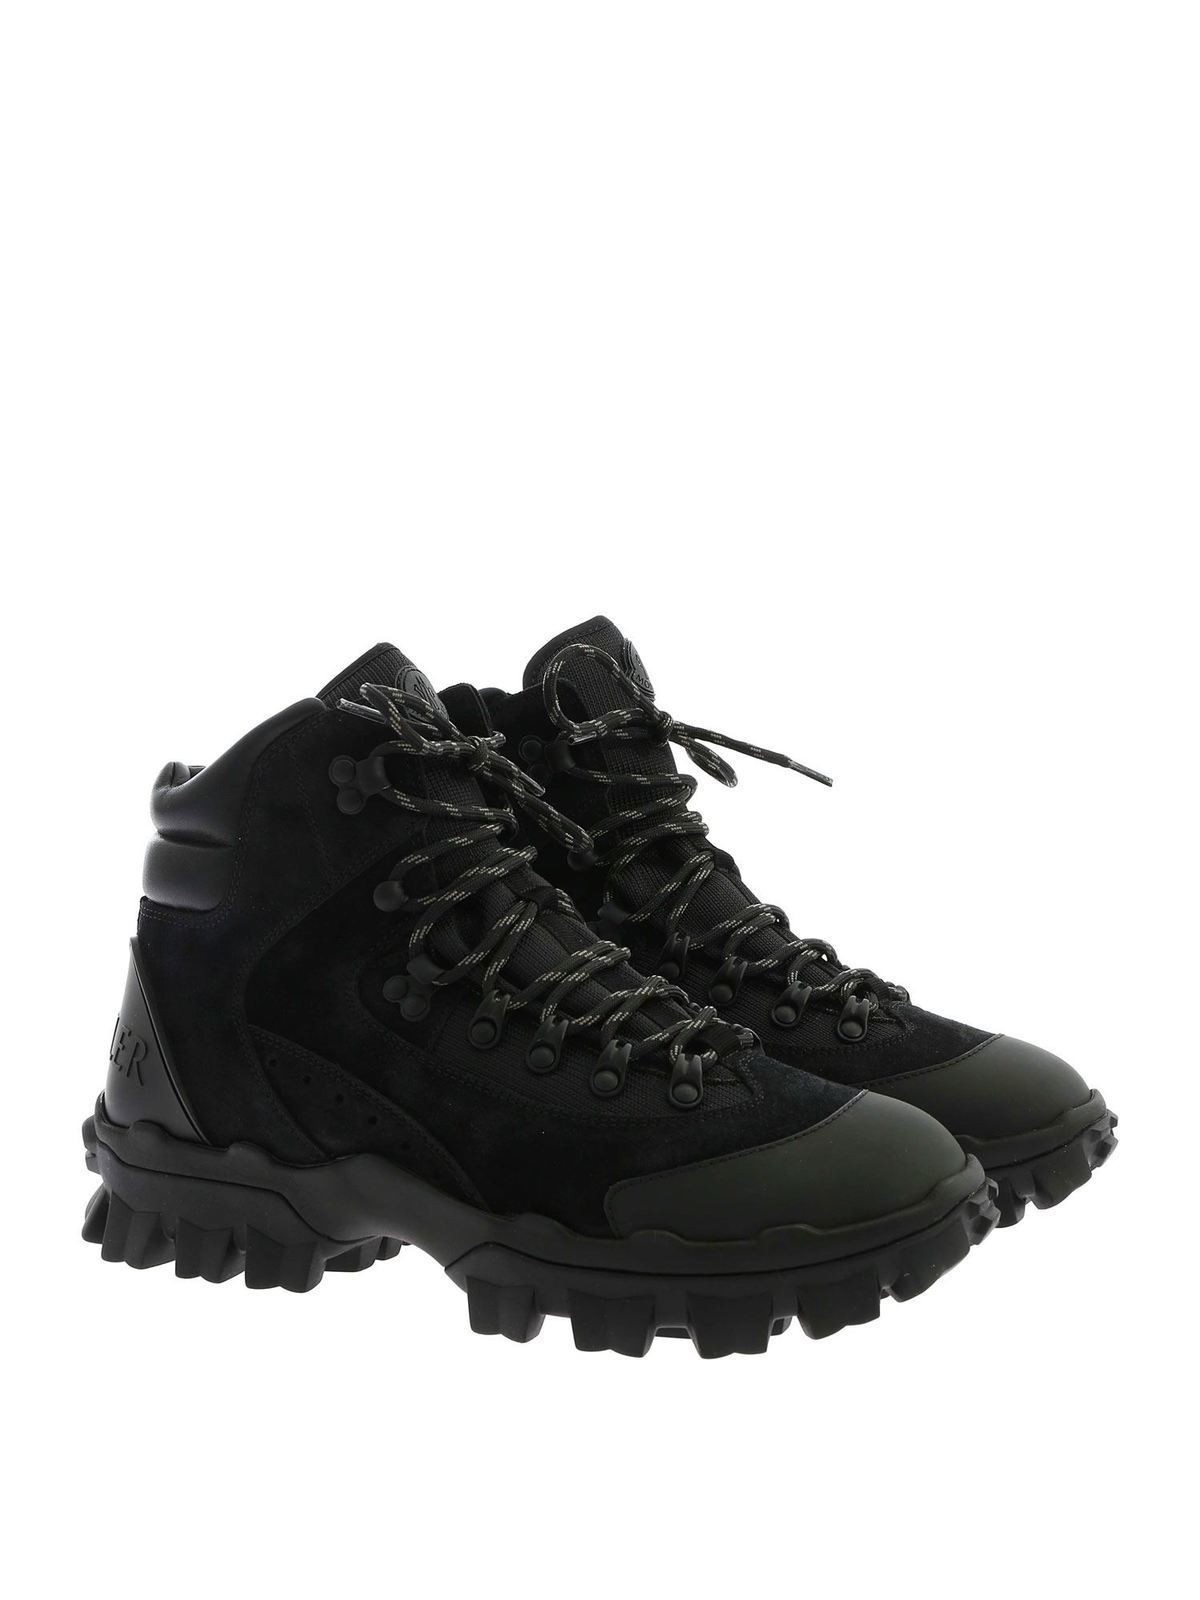 trekking shoes black